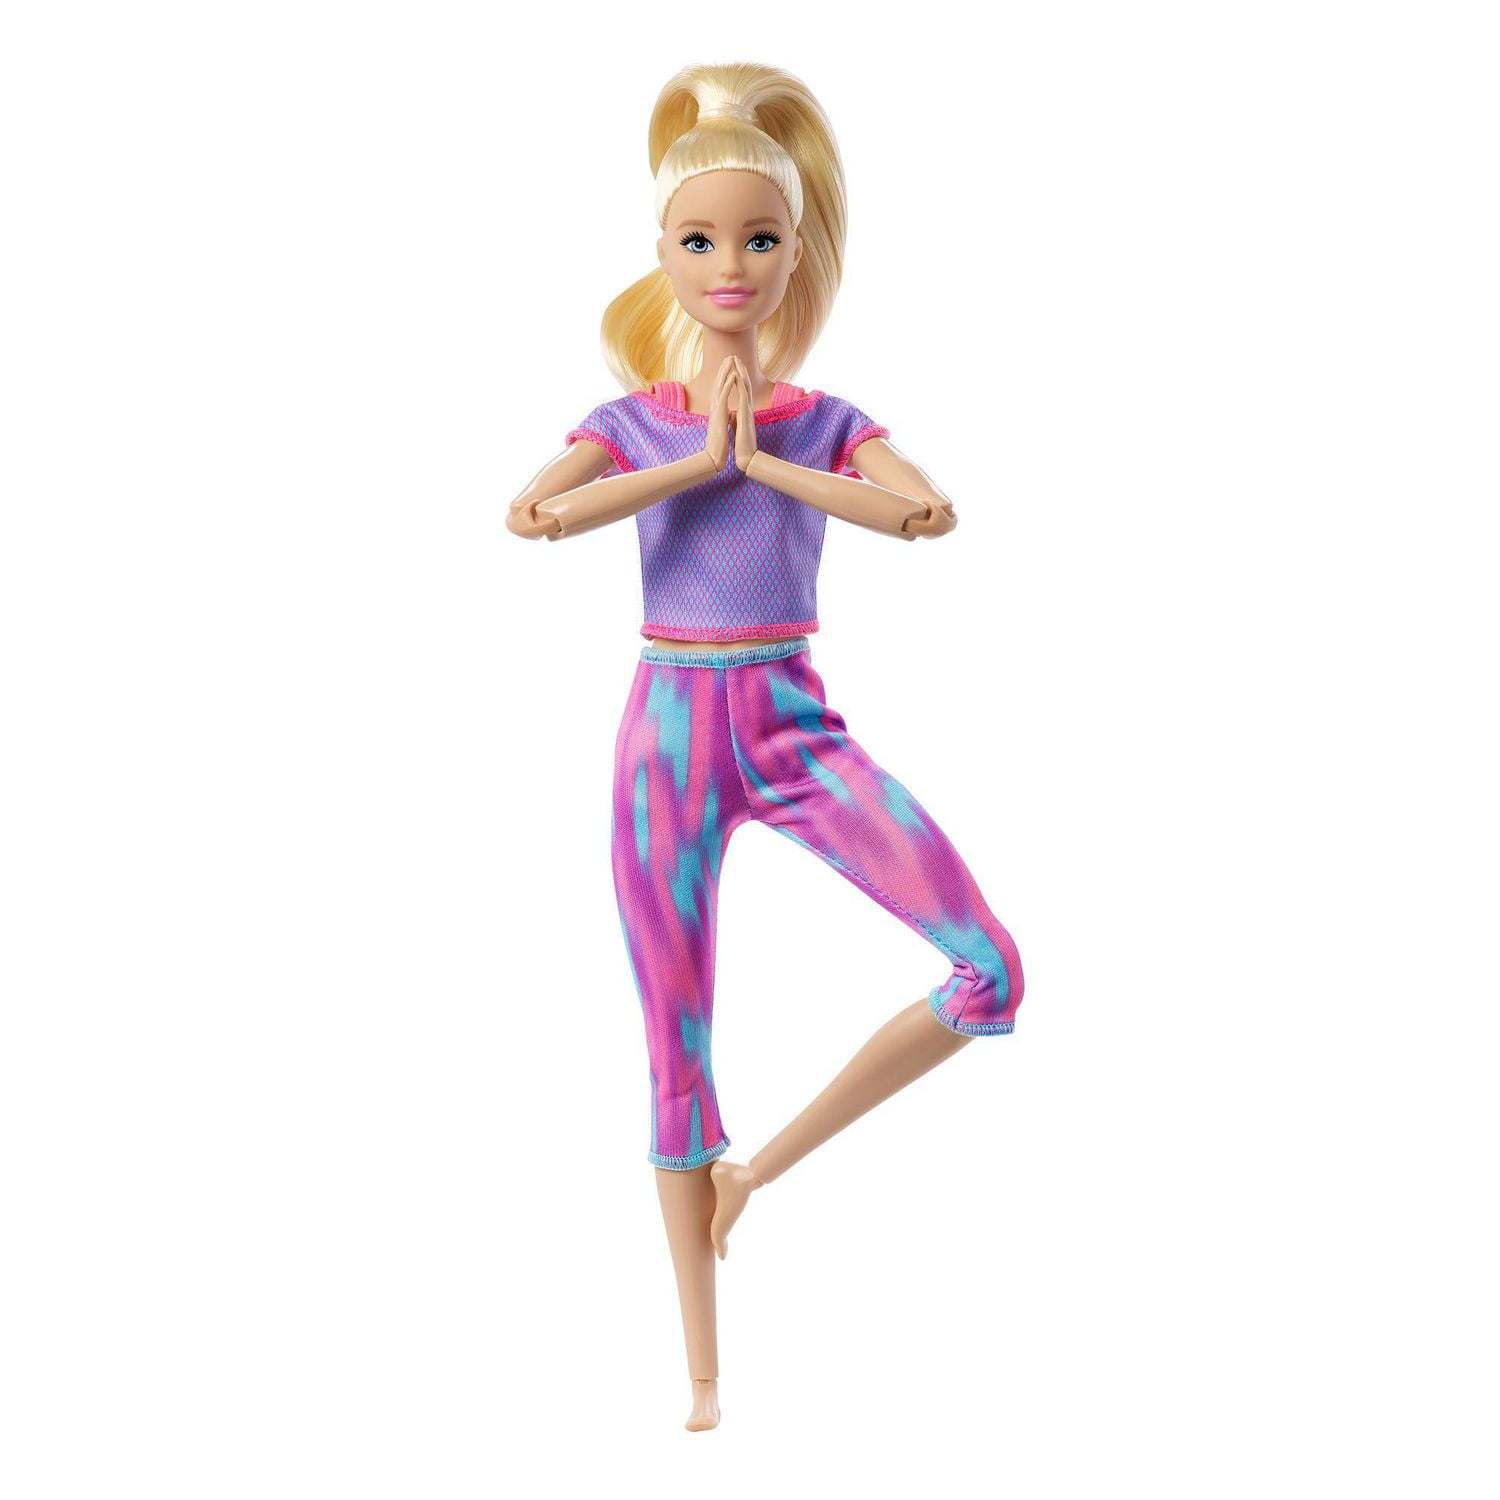 Barbie Yoga Pants -  Canada